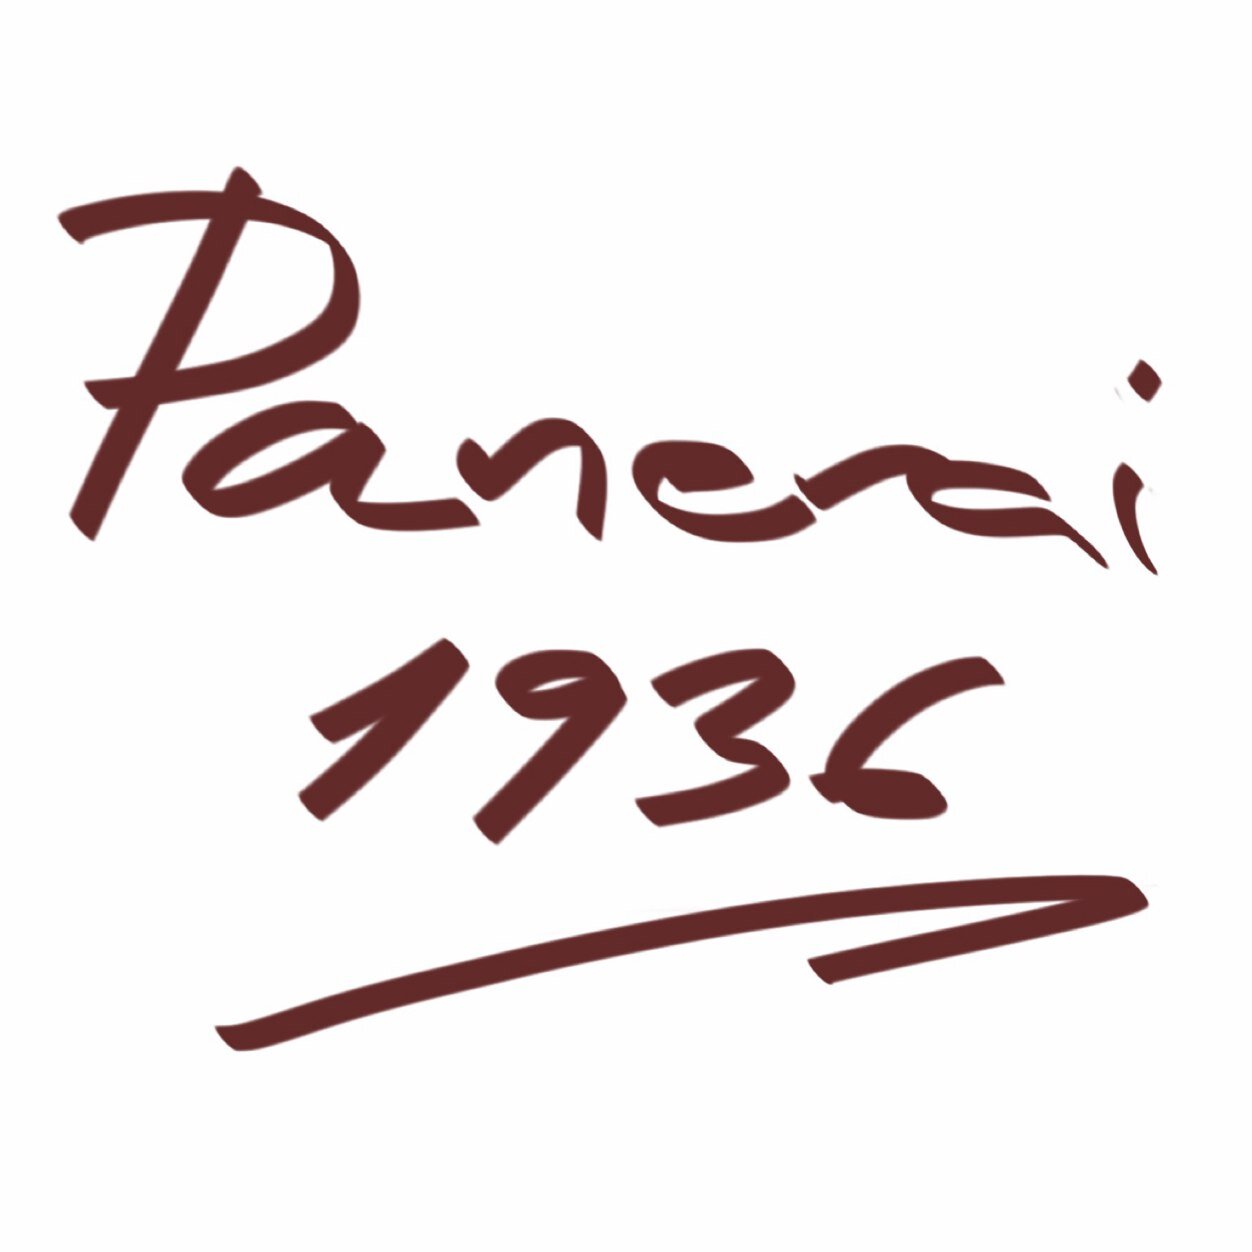 Panerai watches: history, passion & luxury. Madrid.